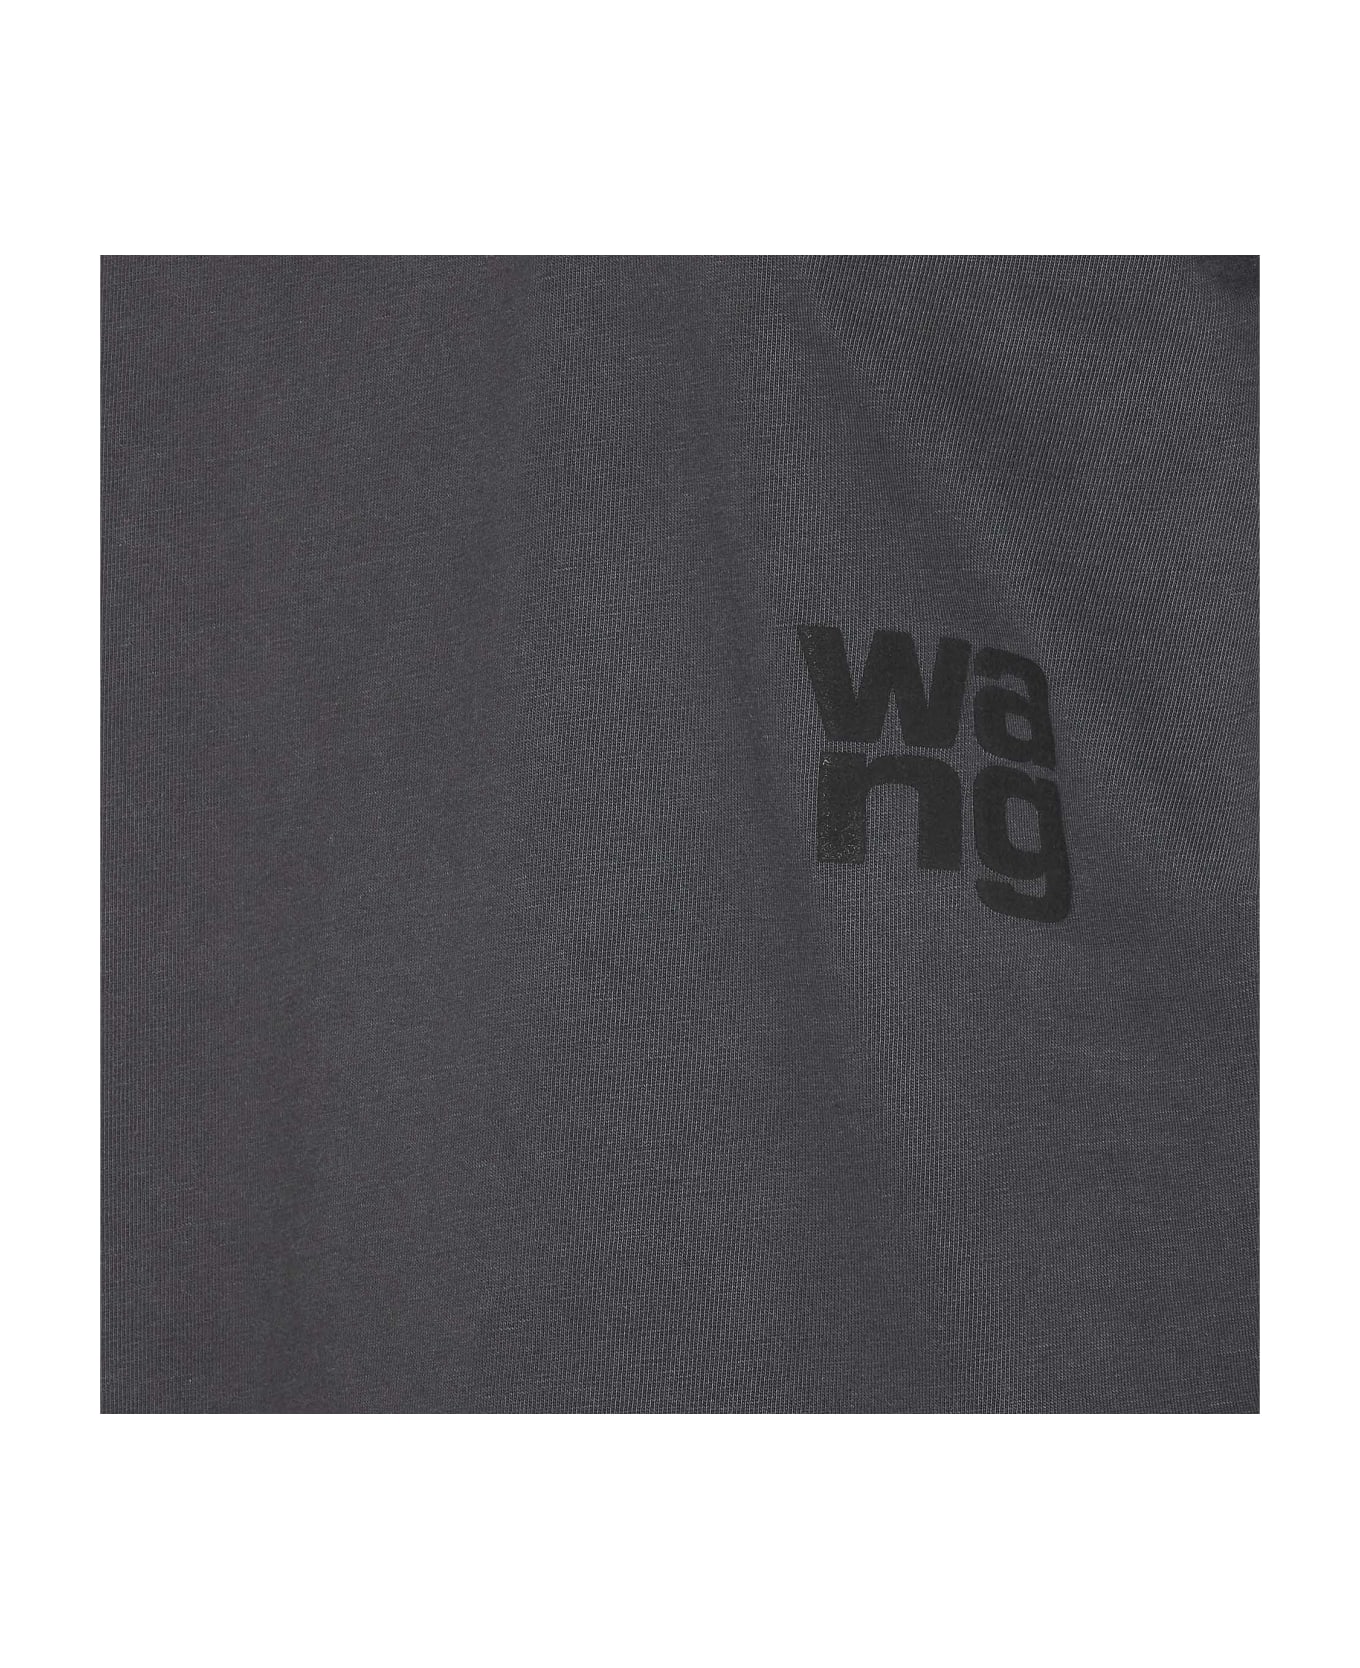 Alexander Wang Logo Print T-shirt - A Soft Obsidian Tシャツ